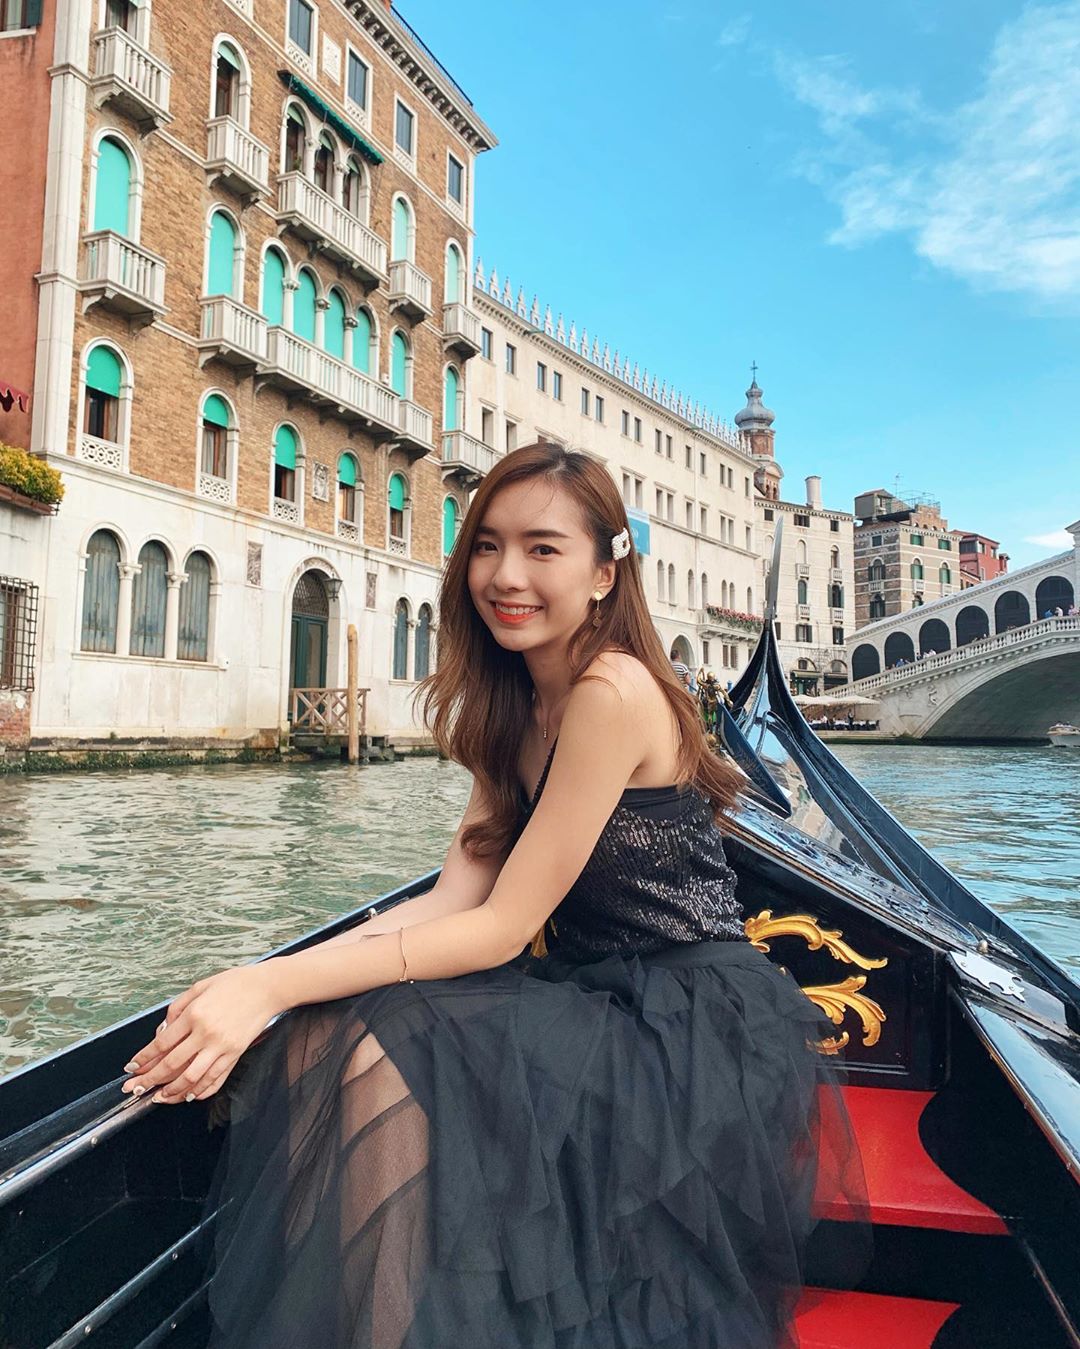  Gondola ride in Venice 